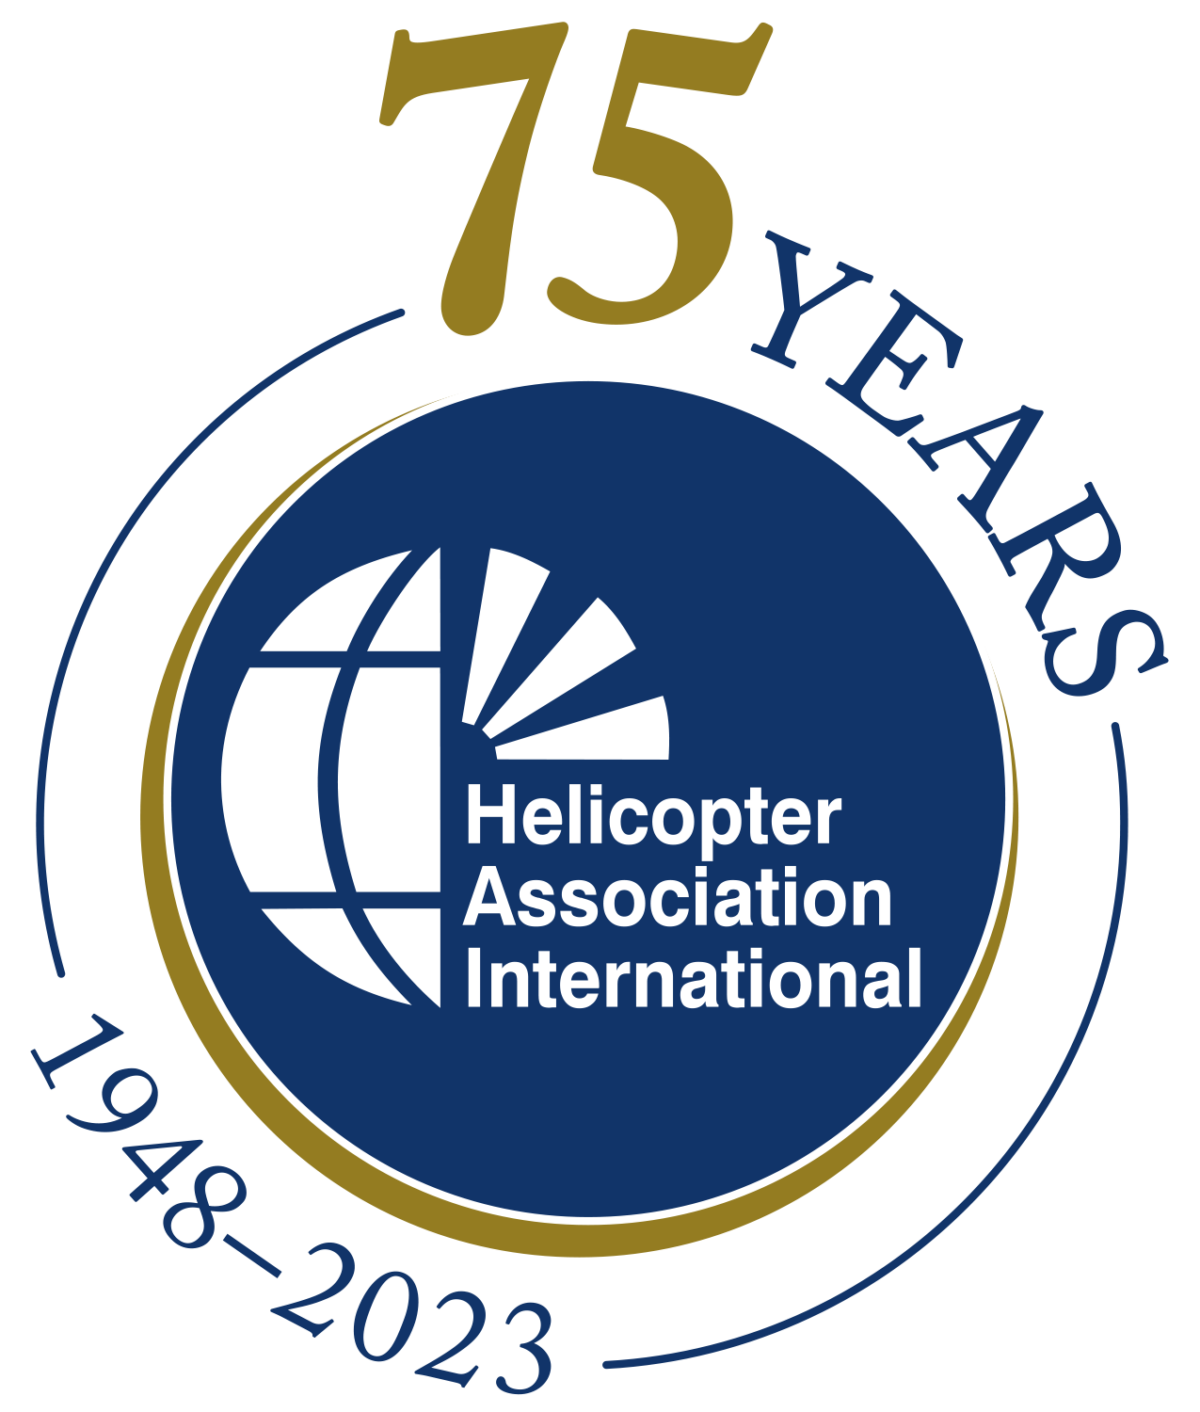 HAI Celebrates 75 Years